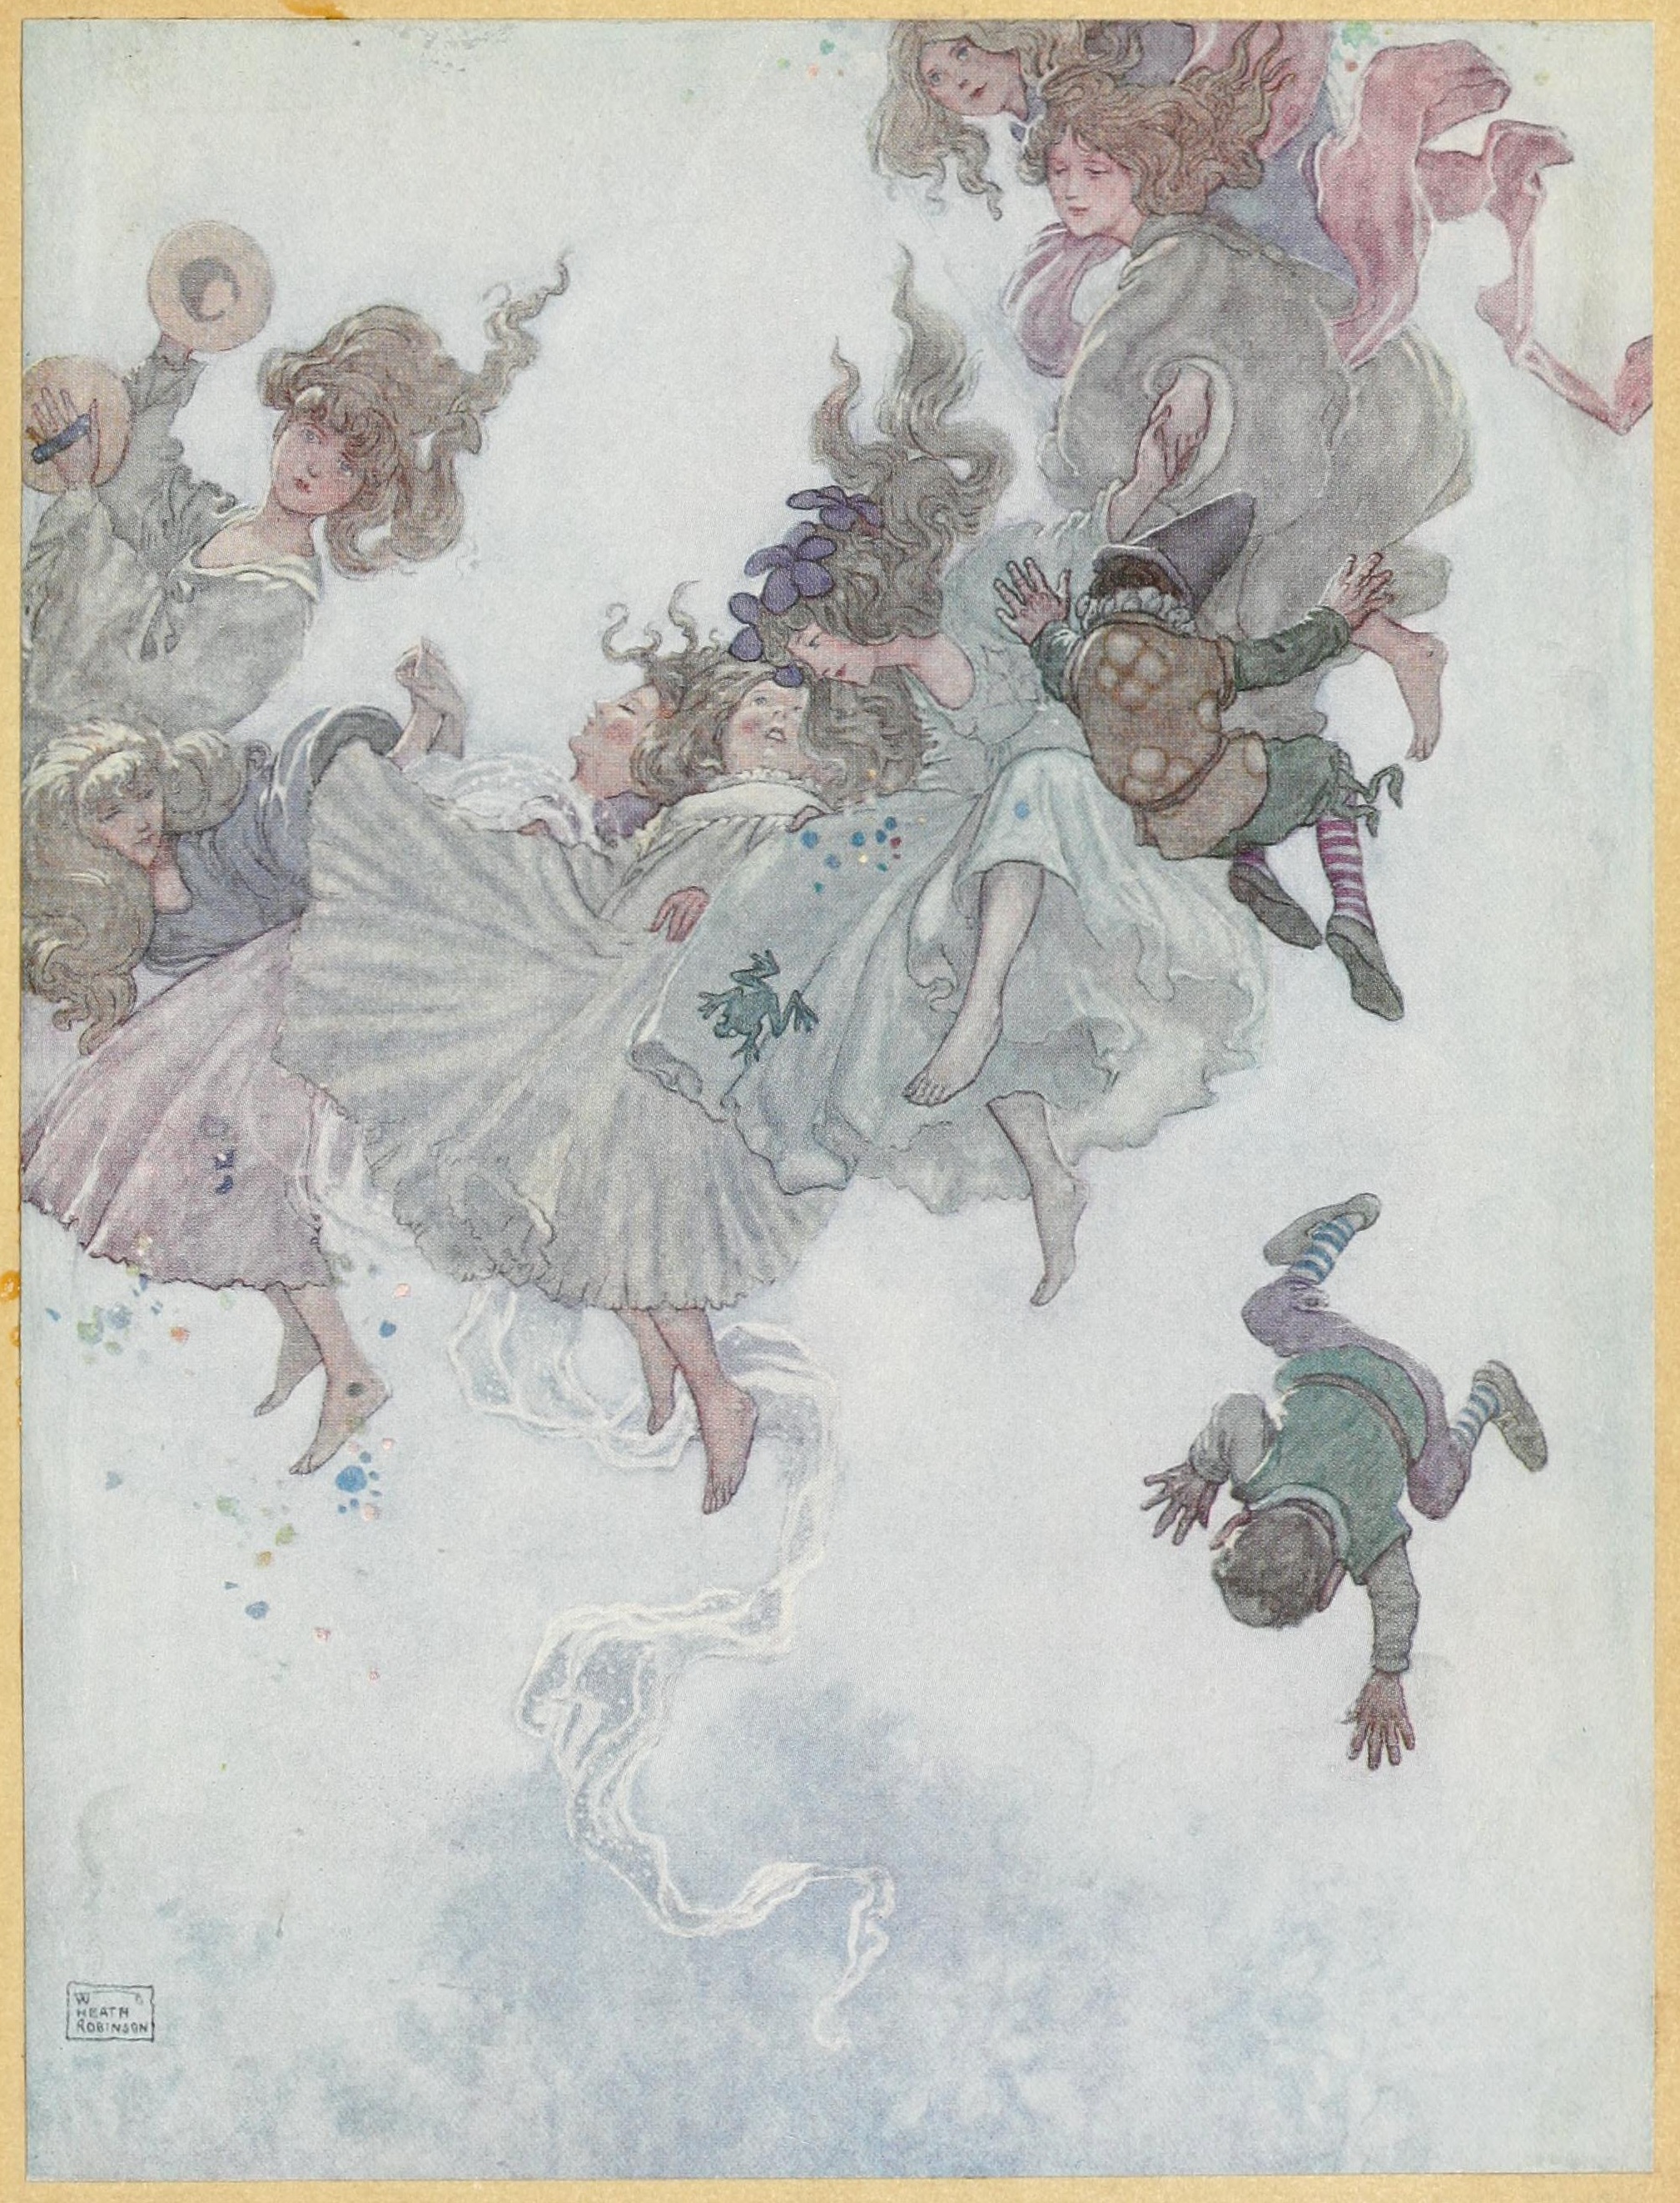 Page facing 126 of Andersen's fairy tales (Robinson)